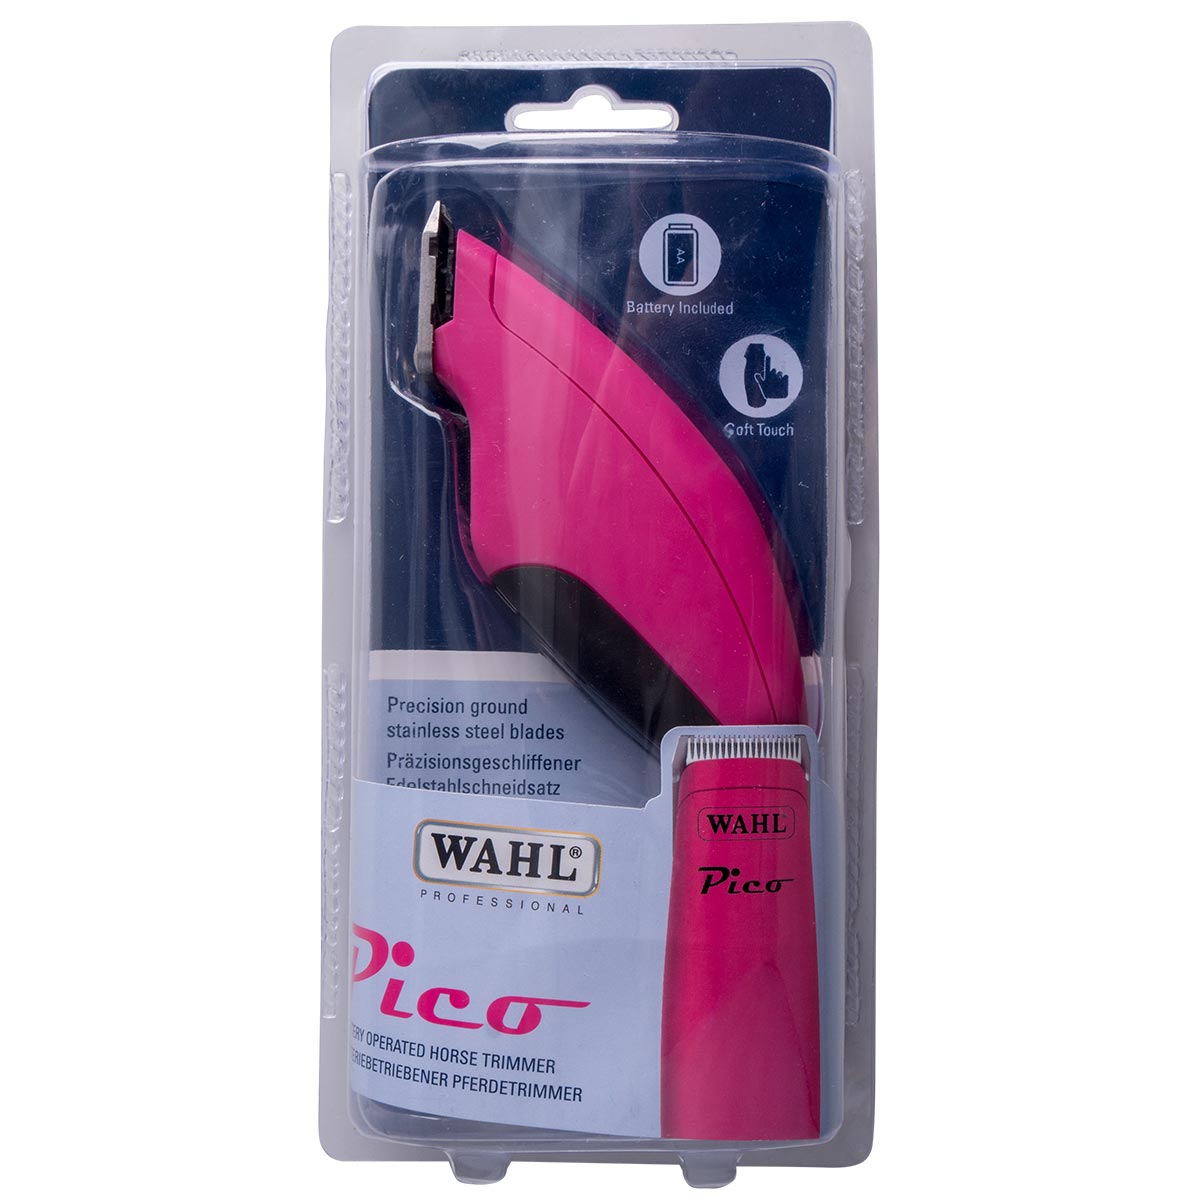 WAHL Pico trimmer lovaknak akkumulátoros rózsaszín